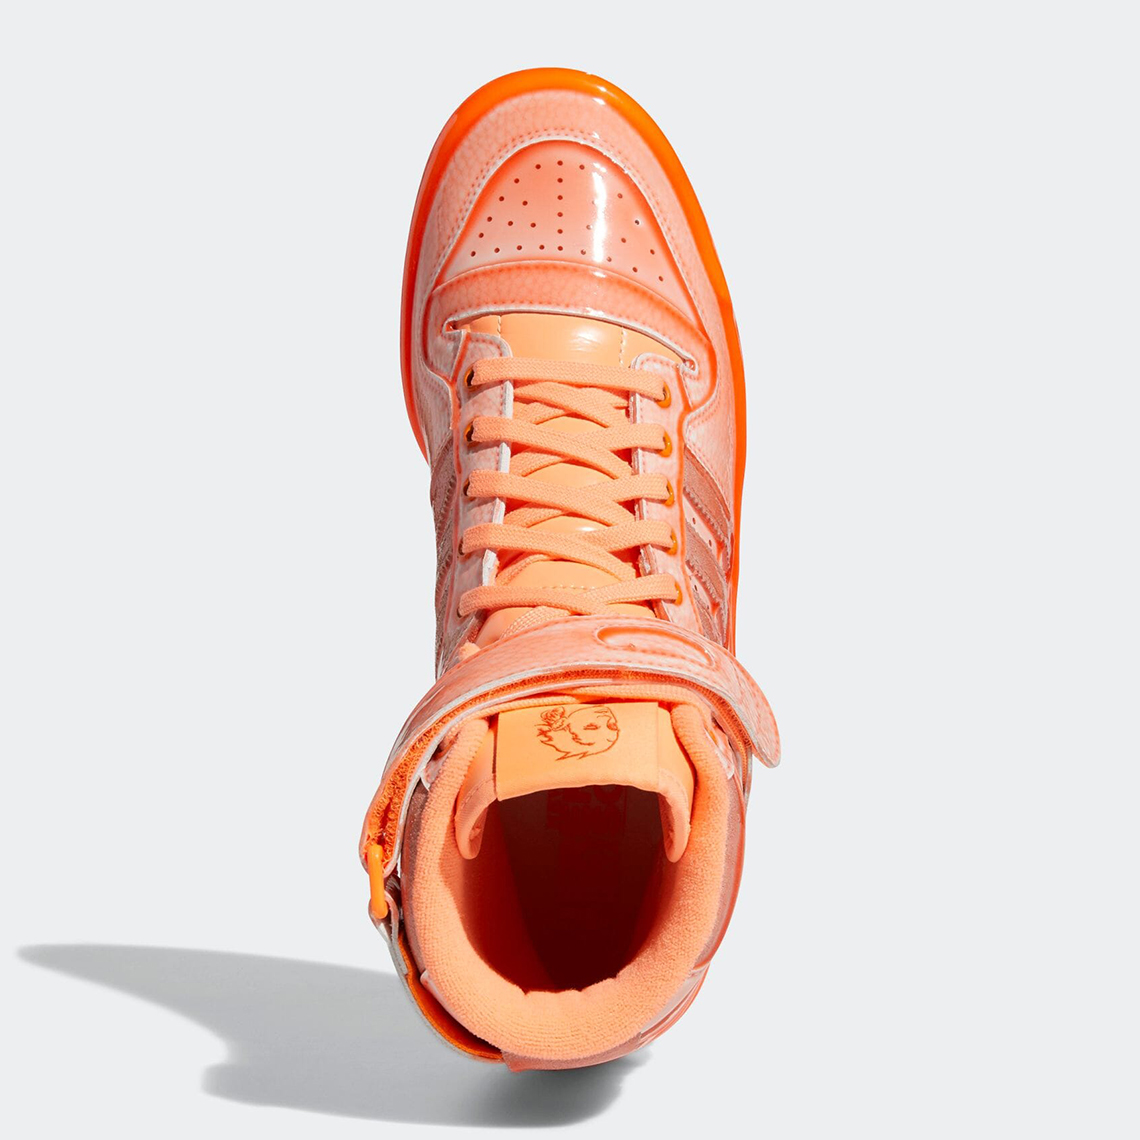 Jeremy Scott Adidas Forum Hi Dipped Orange Q46124 8